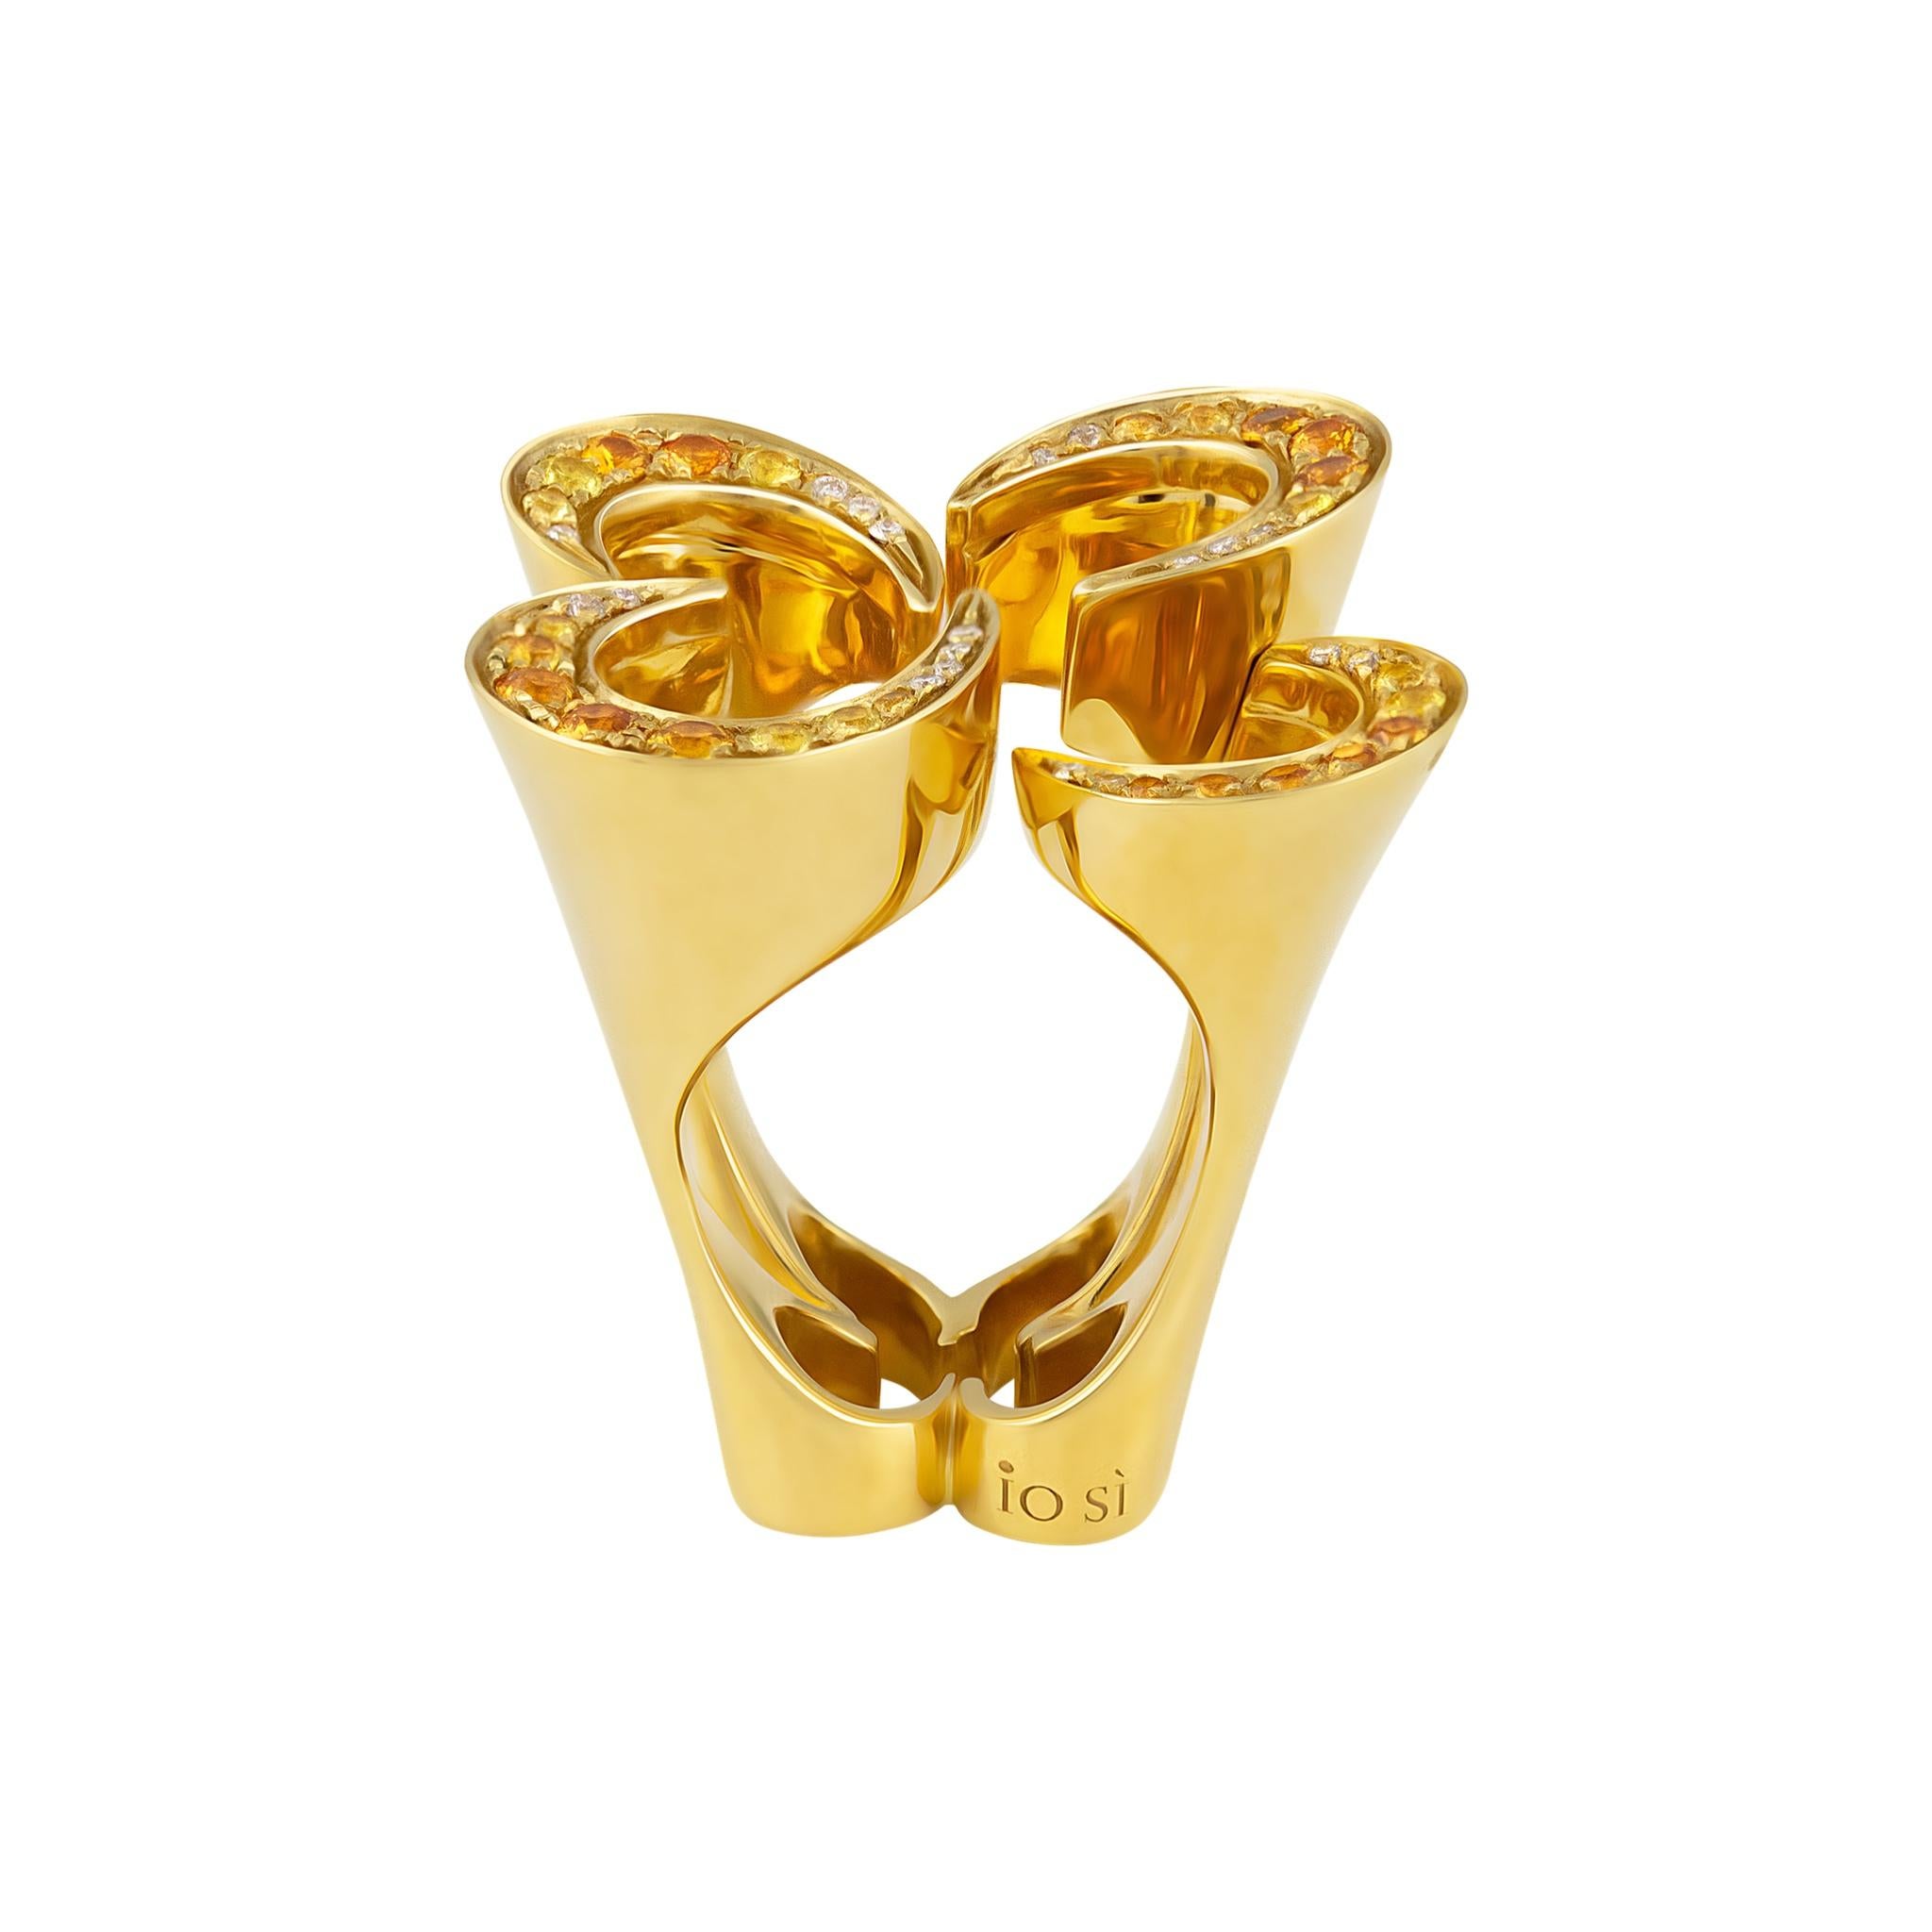 IO SI by Stefan Hafner
18K Yellow Gold
Diamond: 0.11ctw
Sapphire: 1.64ctw
Size: 5.5
Retail price: $14,800.00
SKU: BLU01073
Italian made